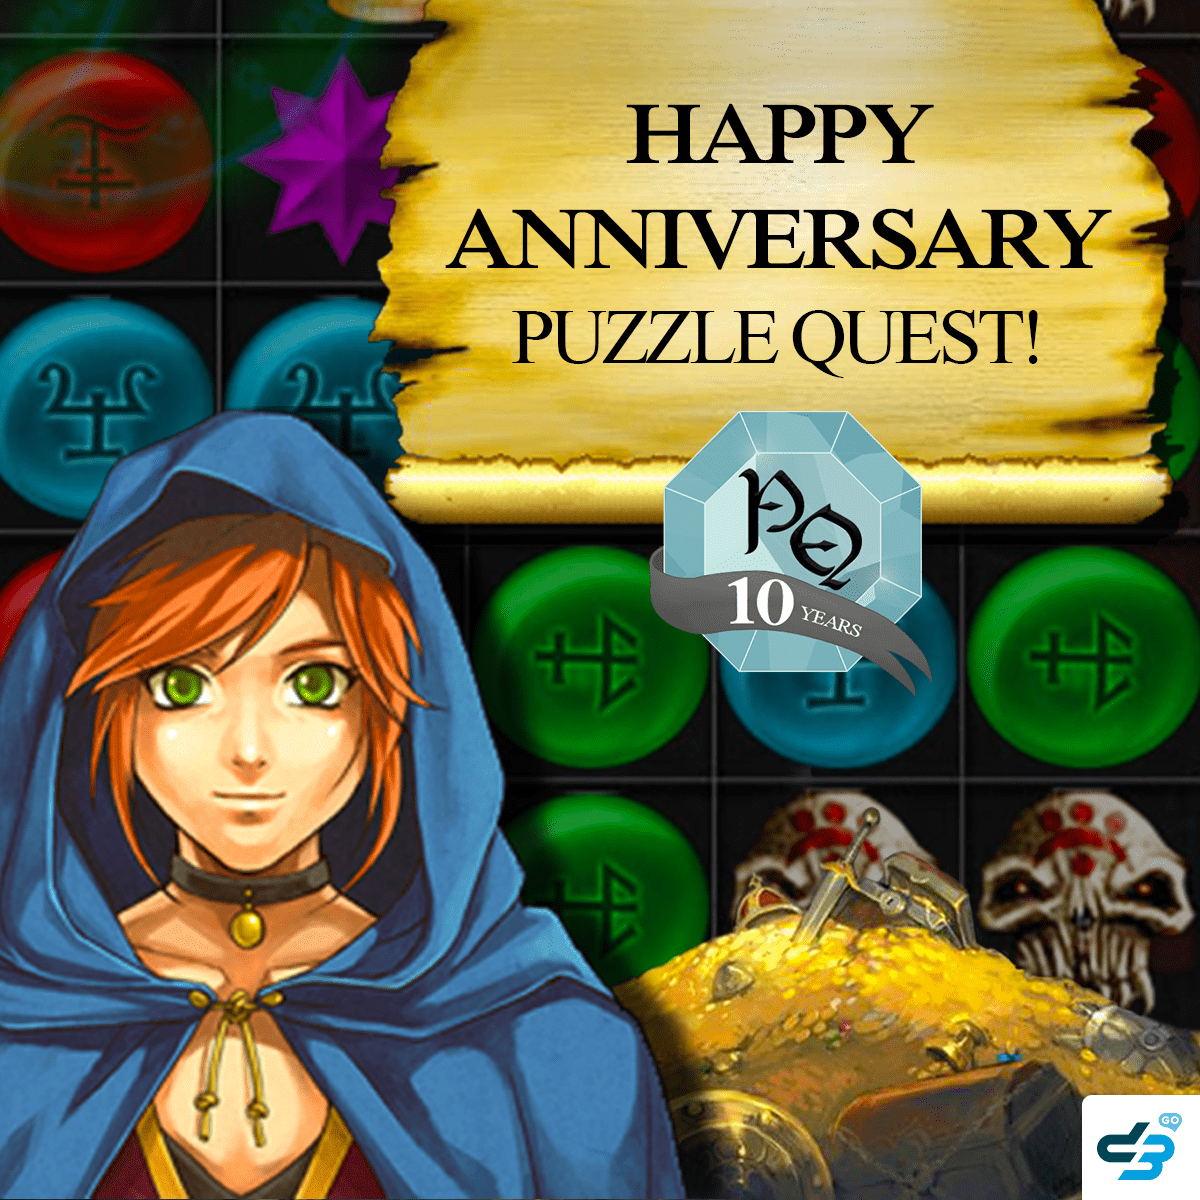 MARVEL Puzzle Quest - 10 Year Celebration - 505 Go Inc.